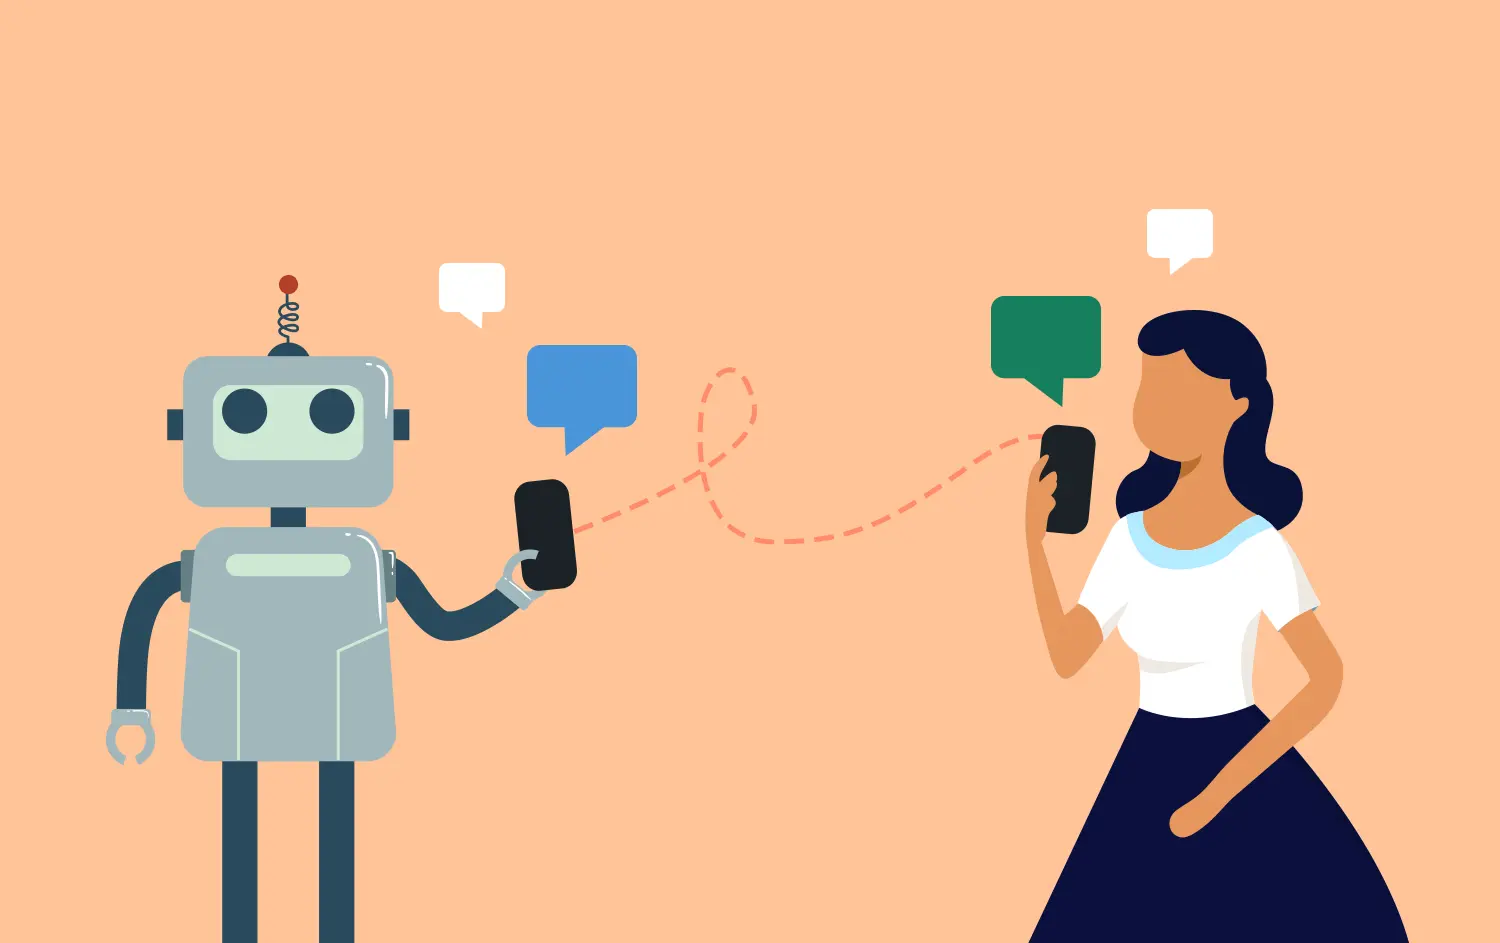 Cartoon representation of a robot sending a text message and a person receiving it